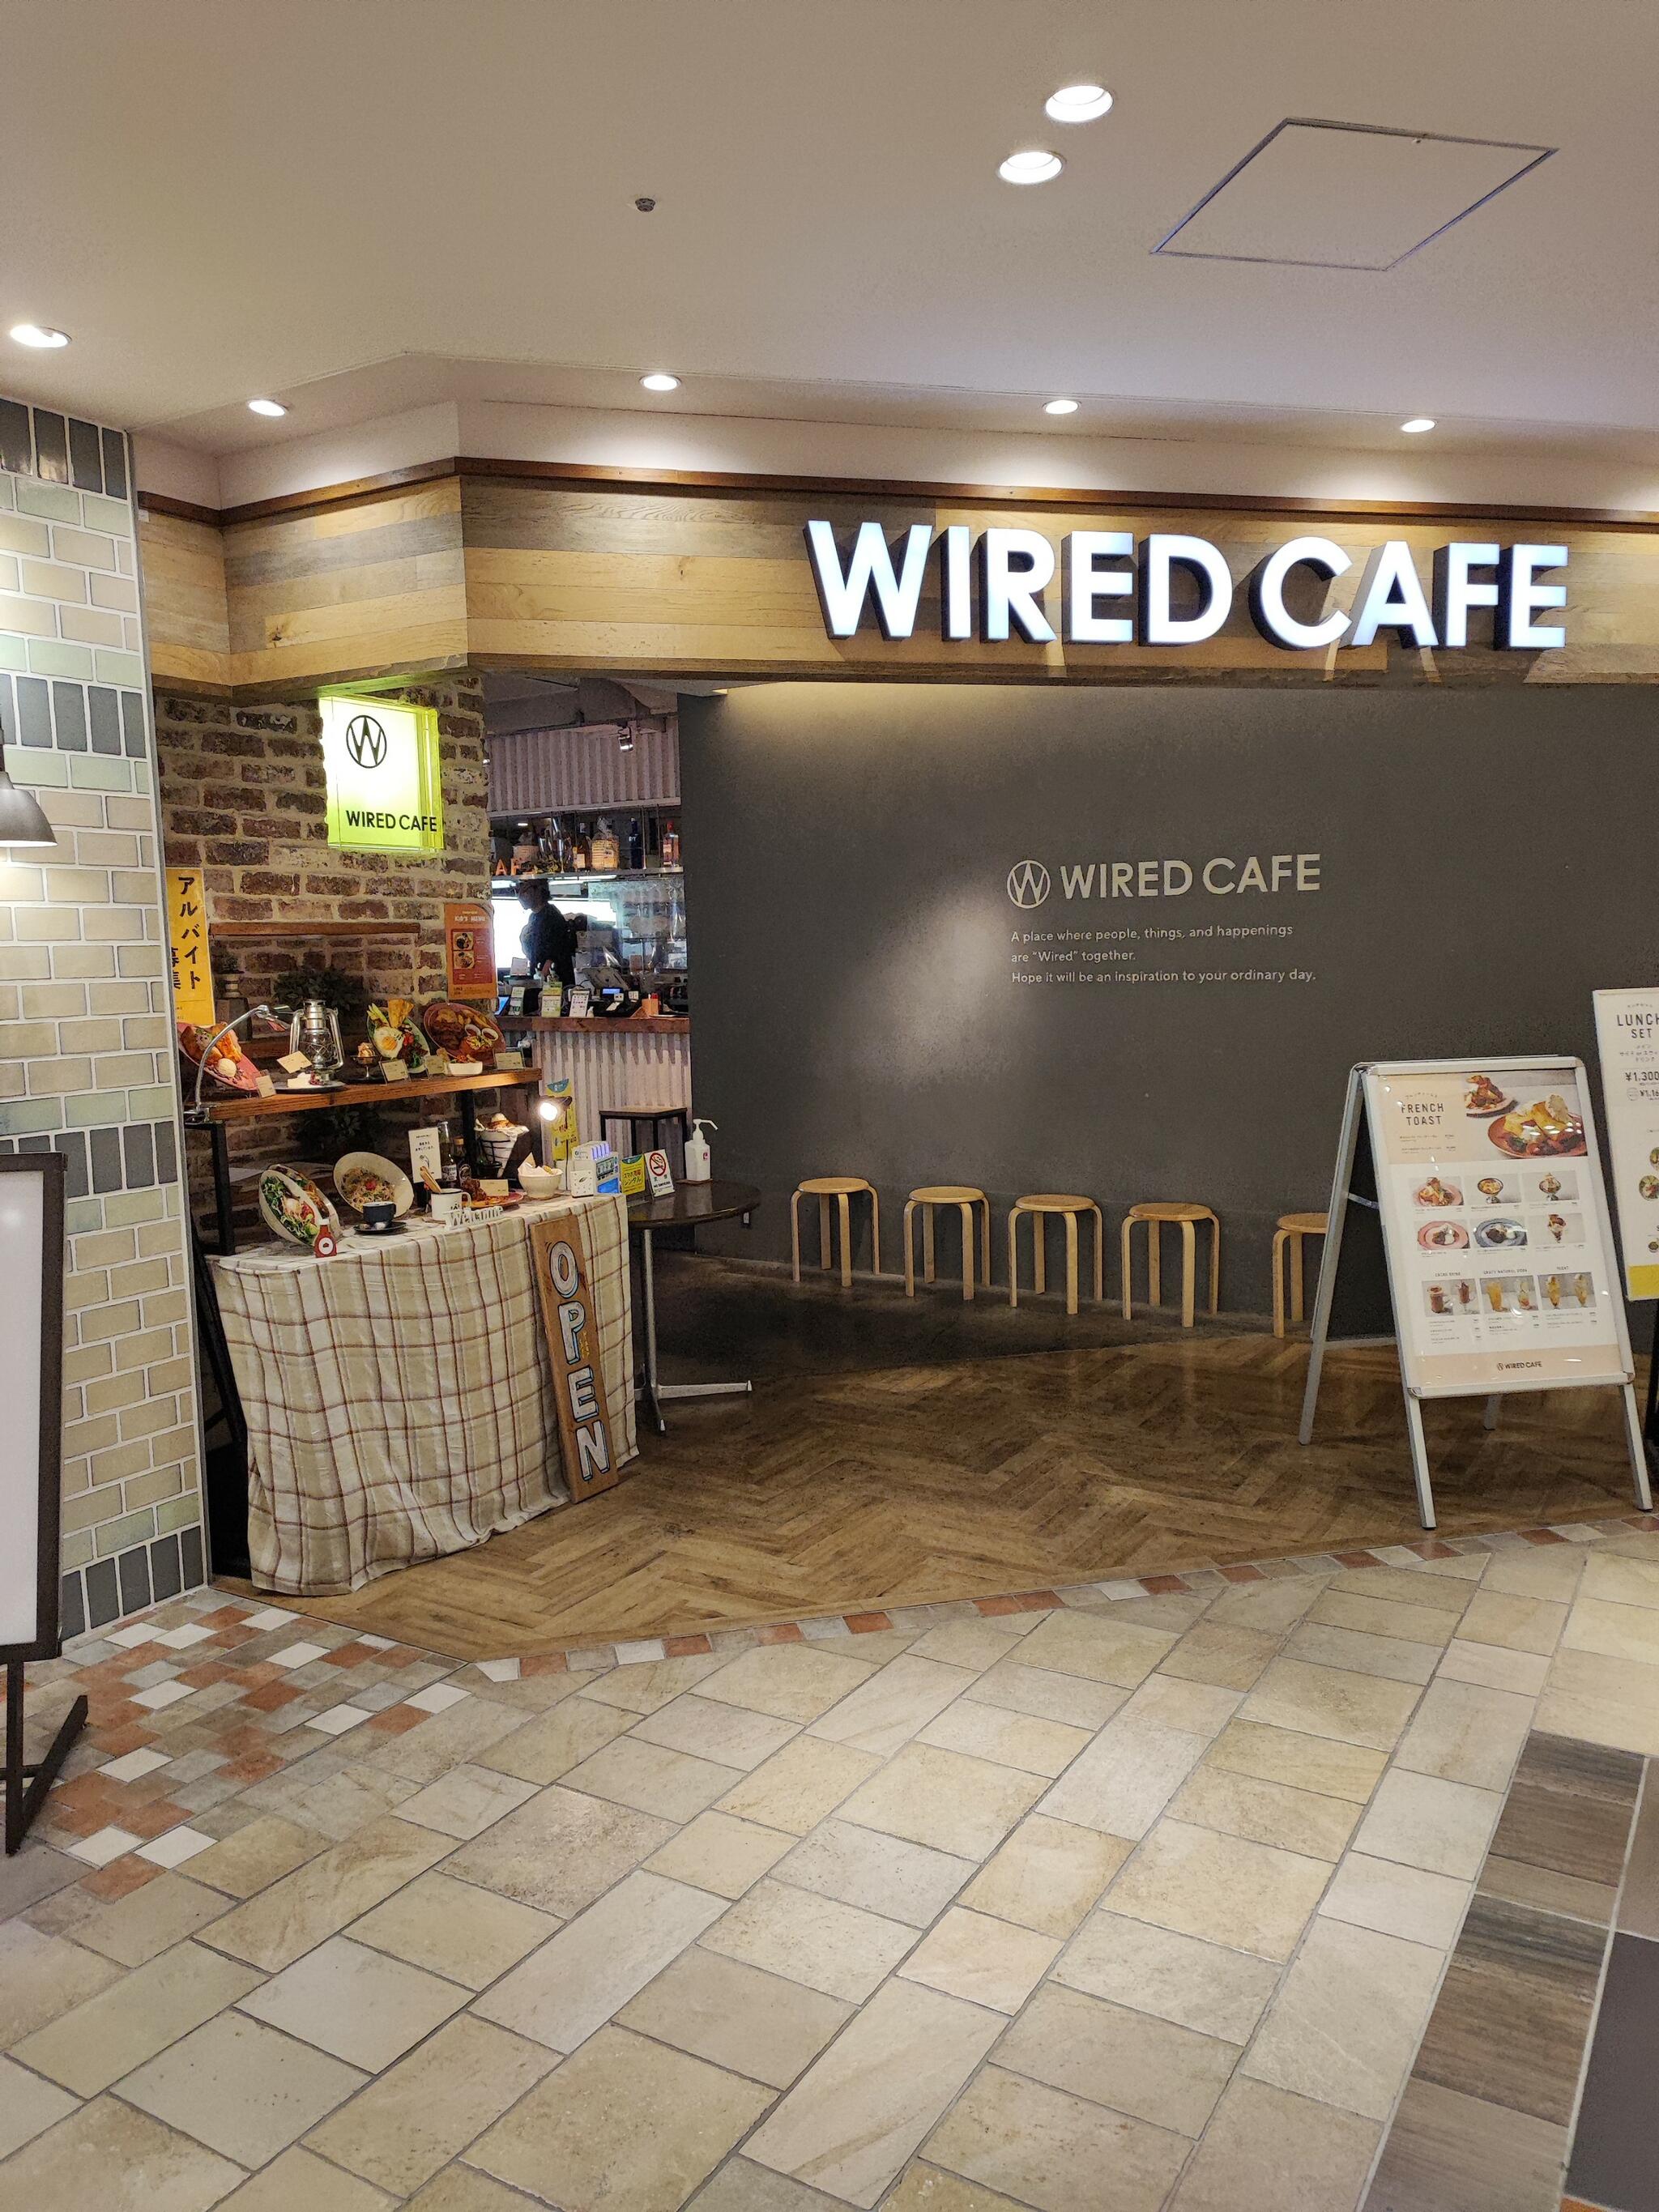 WIRED CAFE アトレ川崎店の代表写真2